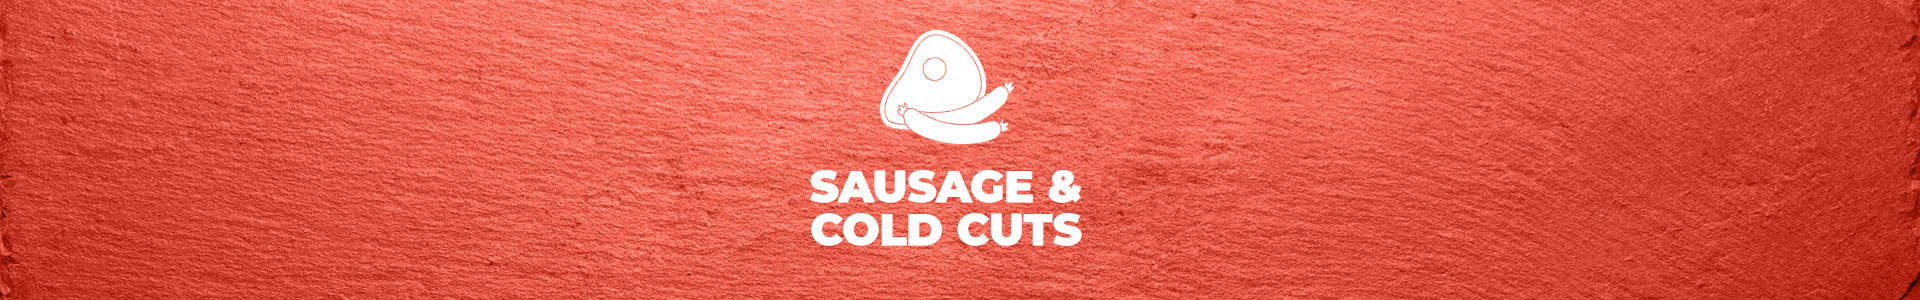 Sausage & Cold Cuts